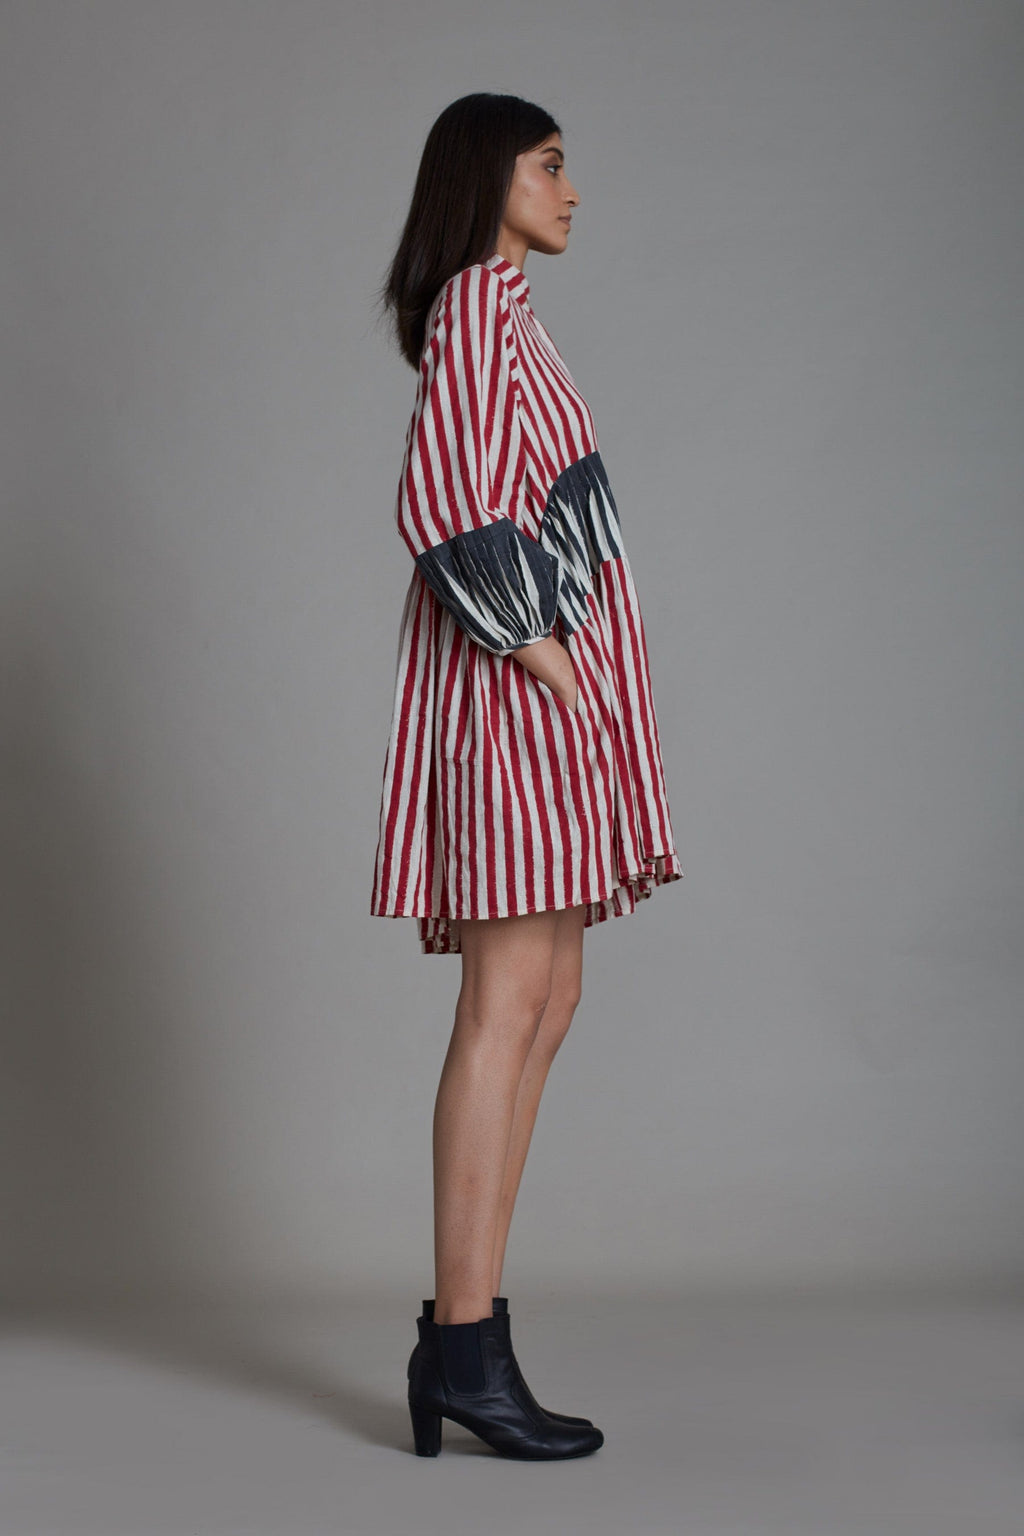 Mati Dresses Uno Stripe Dress - Red with Black